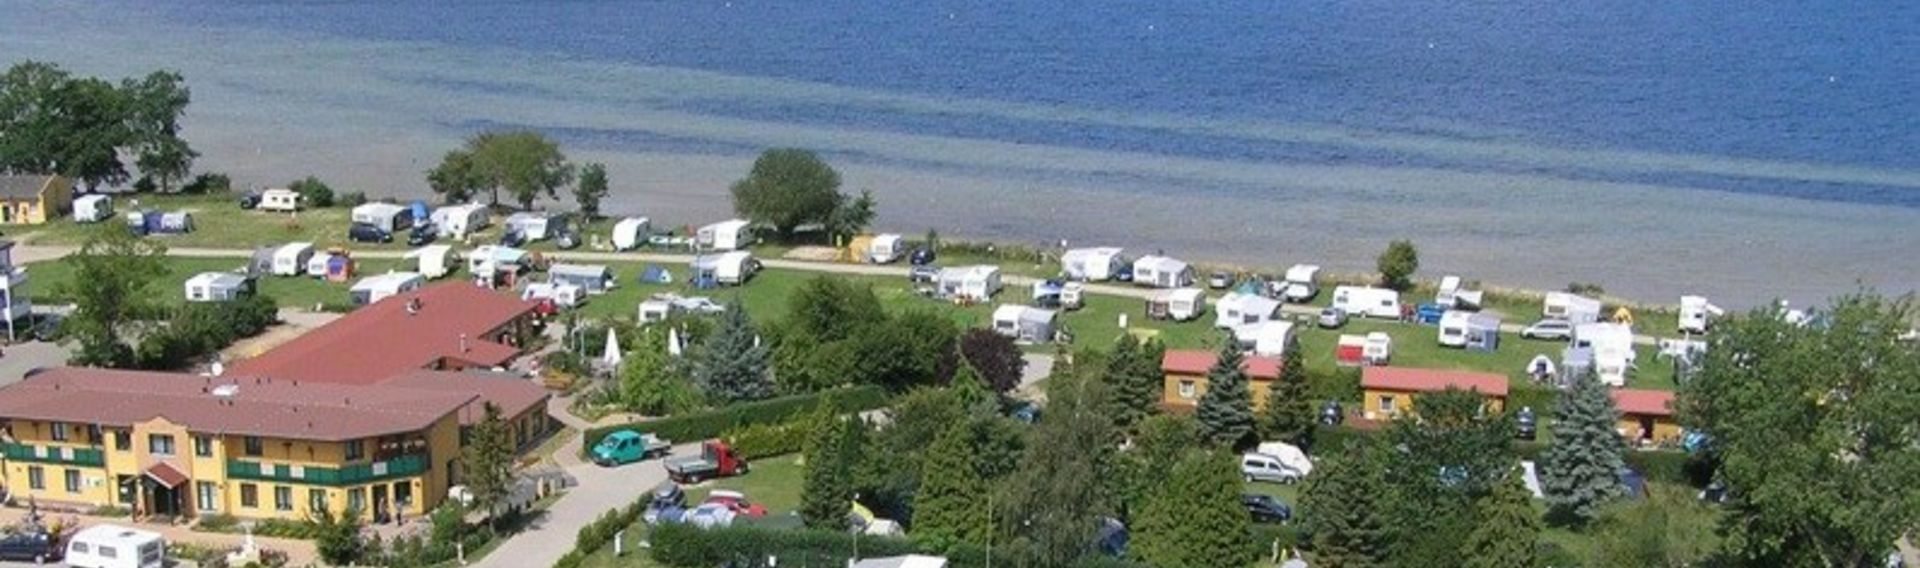 Ostsee Camping mit Hund